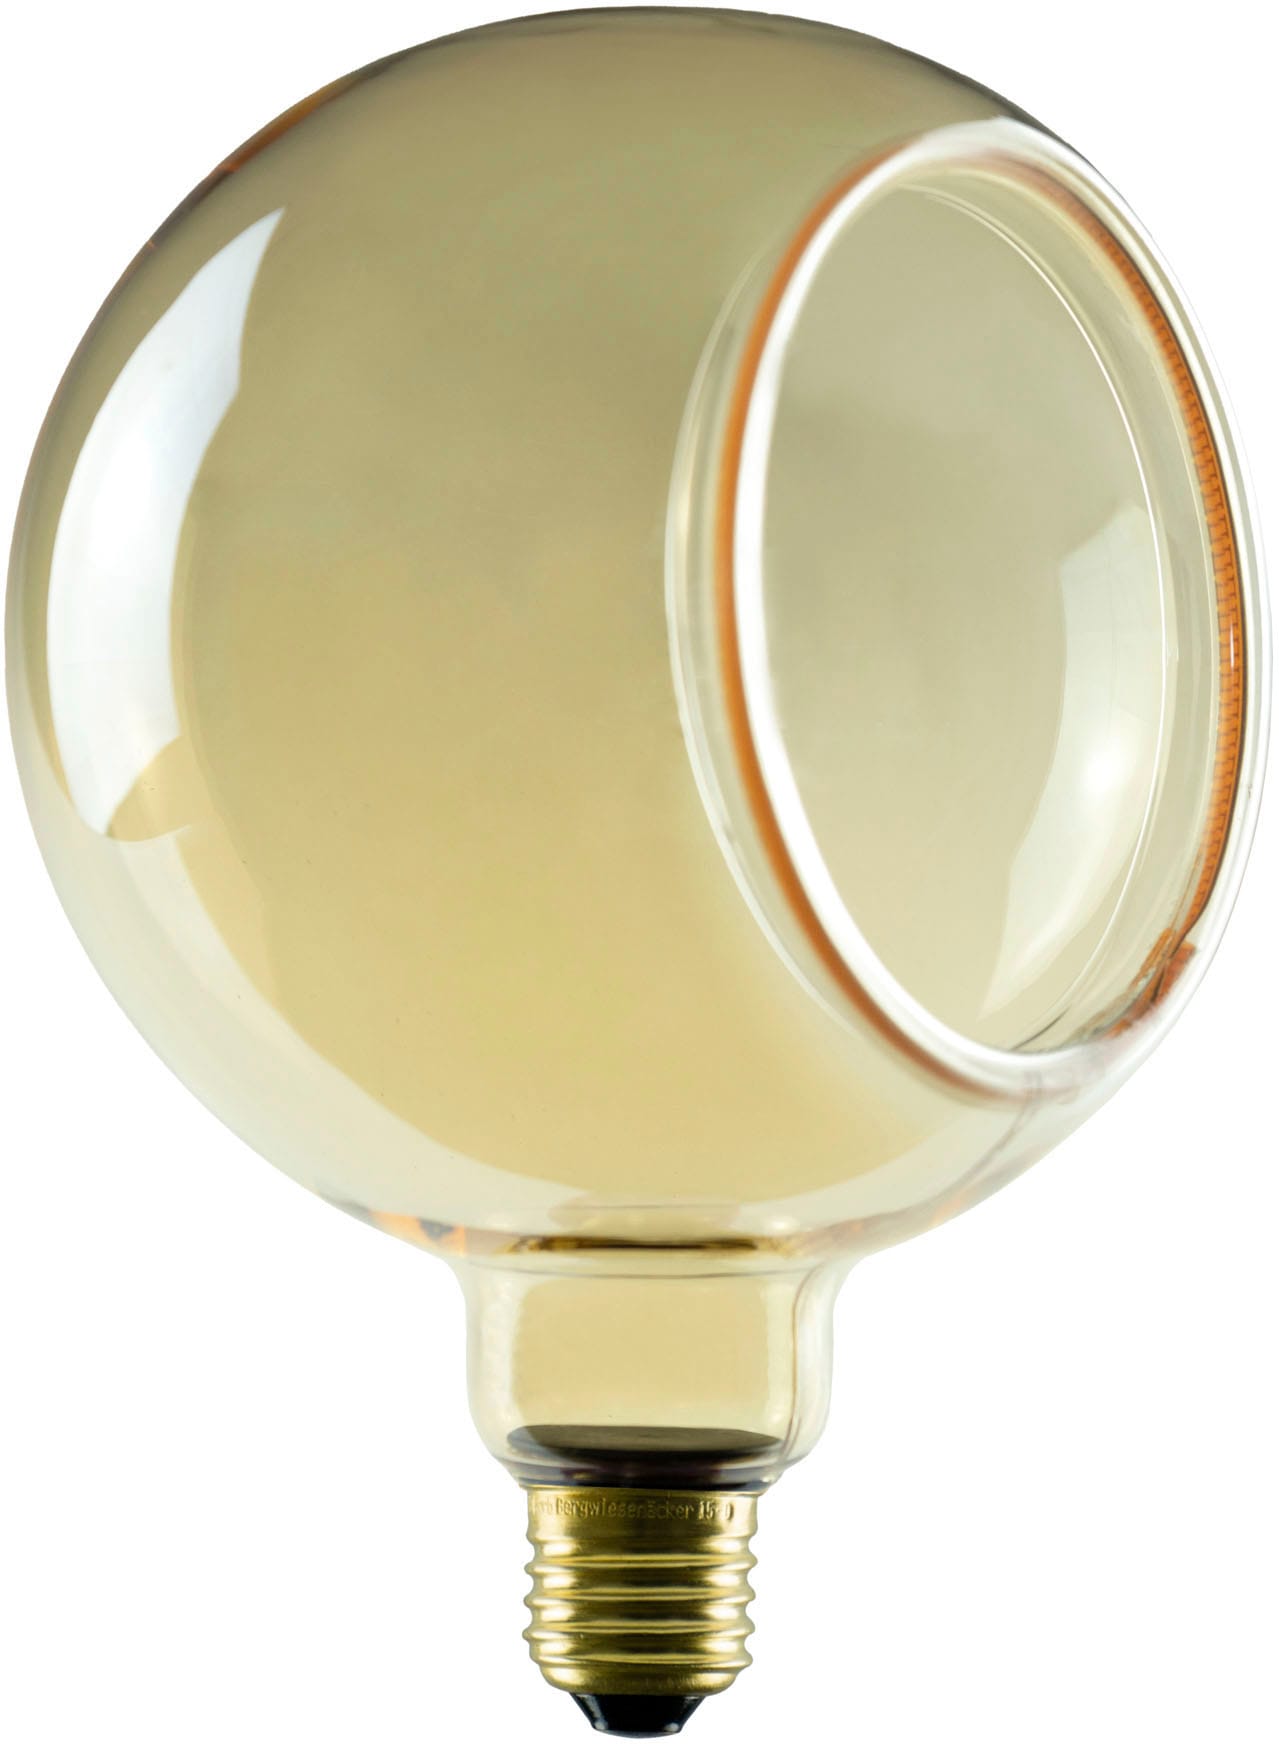 SEGULA LED-Leuchtmittel »LED Floating Globe 4,5W, 1 150 90°«, gold gold CRI Floating LED - Extra-Warmweiß, 90, dimmbar 150 E27, | BAUR 90°, E27, - bestellen St., Globe